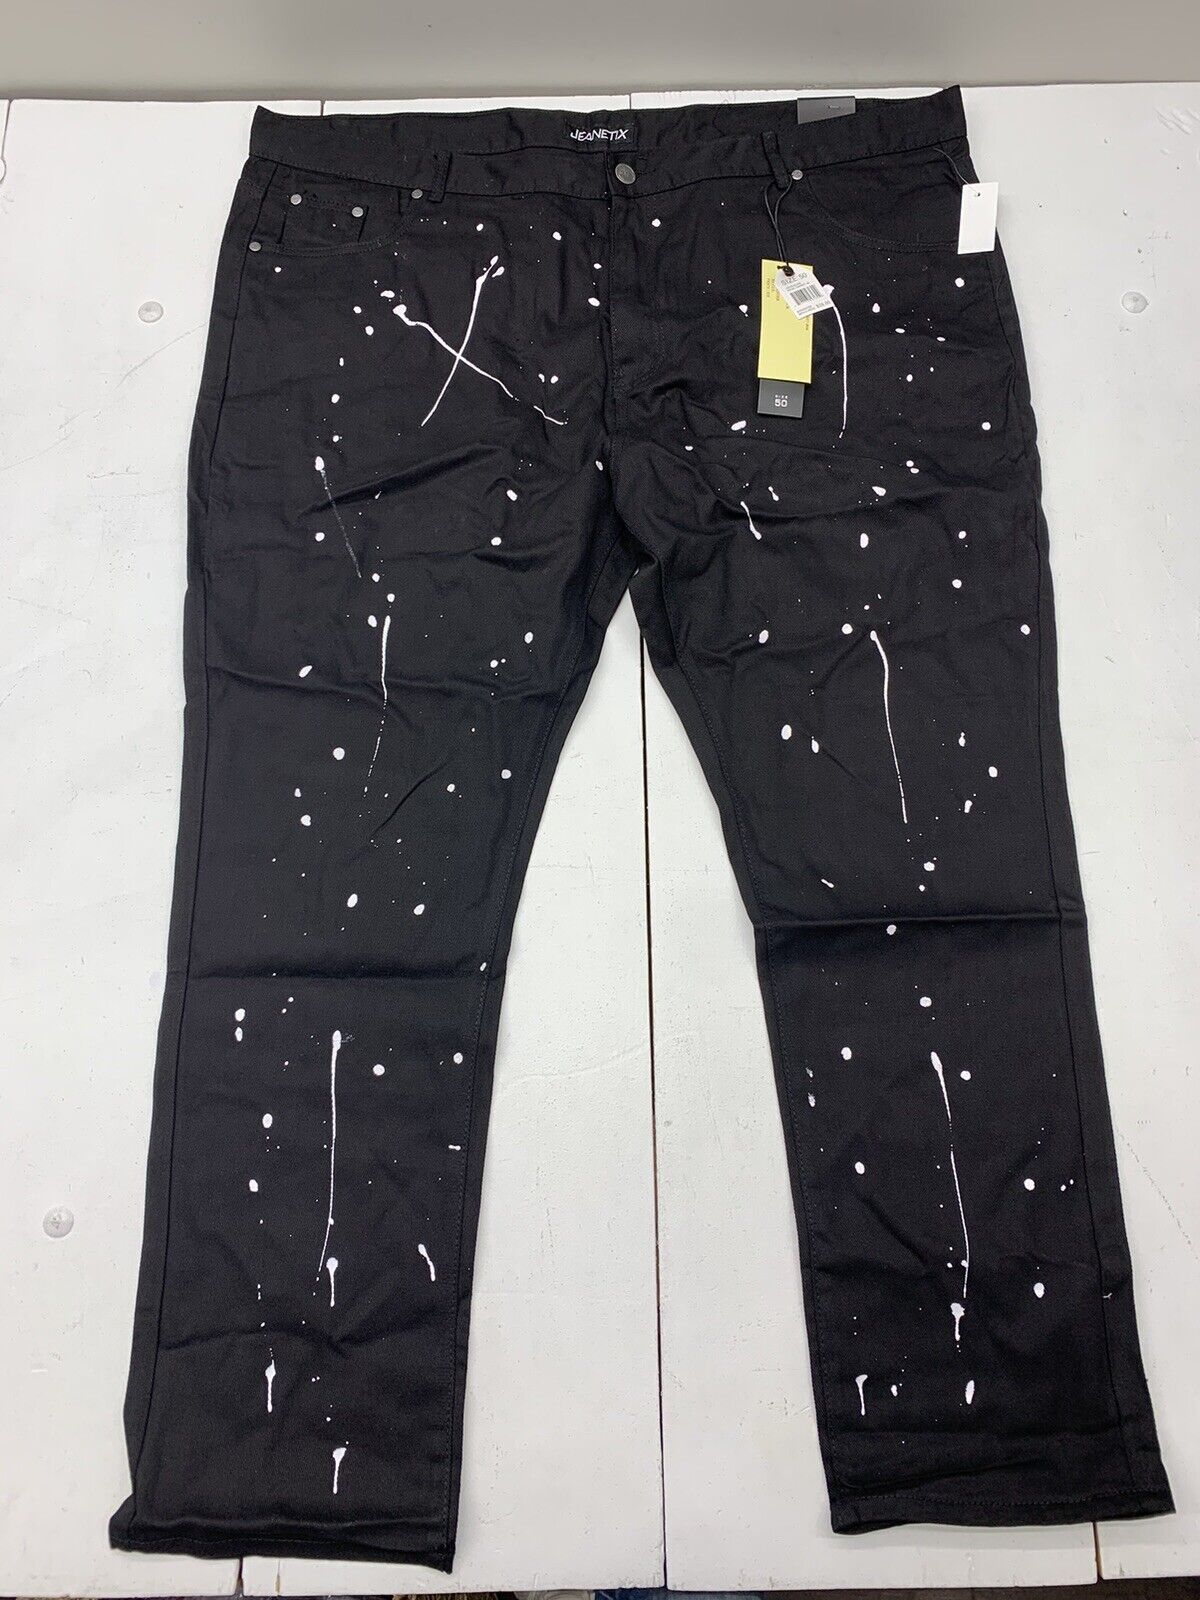 Jeanetix Mens Black Paint Splatter Jeans Size 50